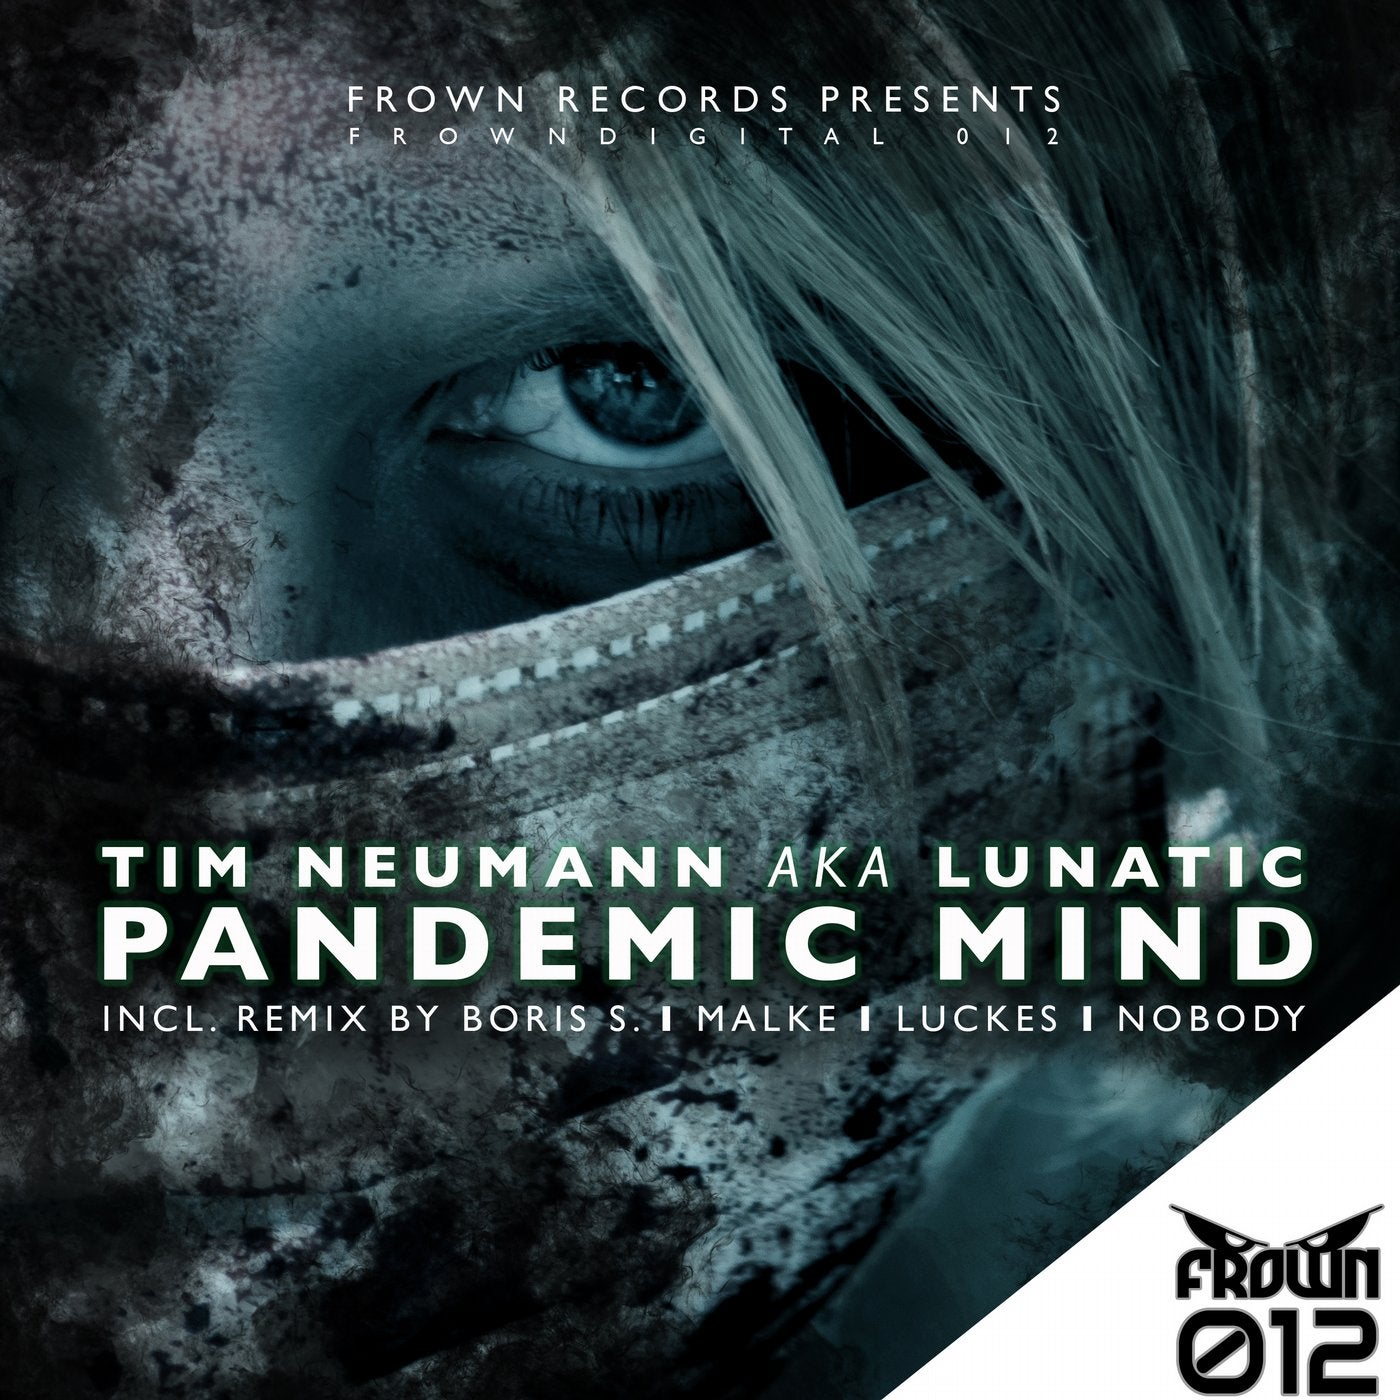 Pandemic Mind EP